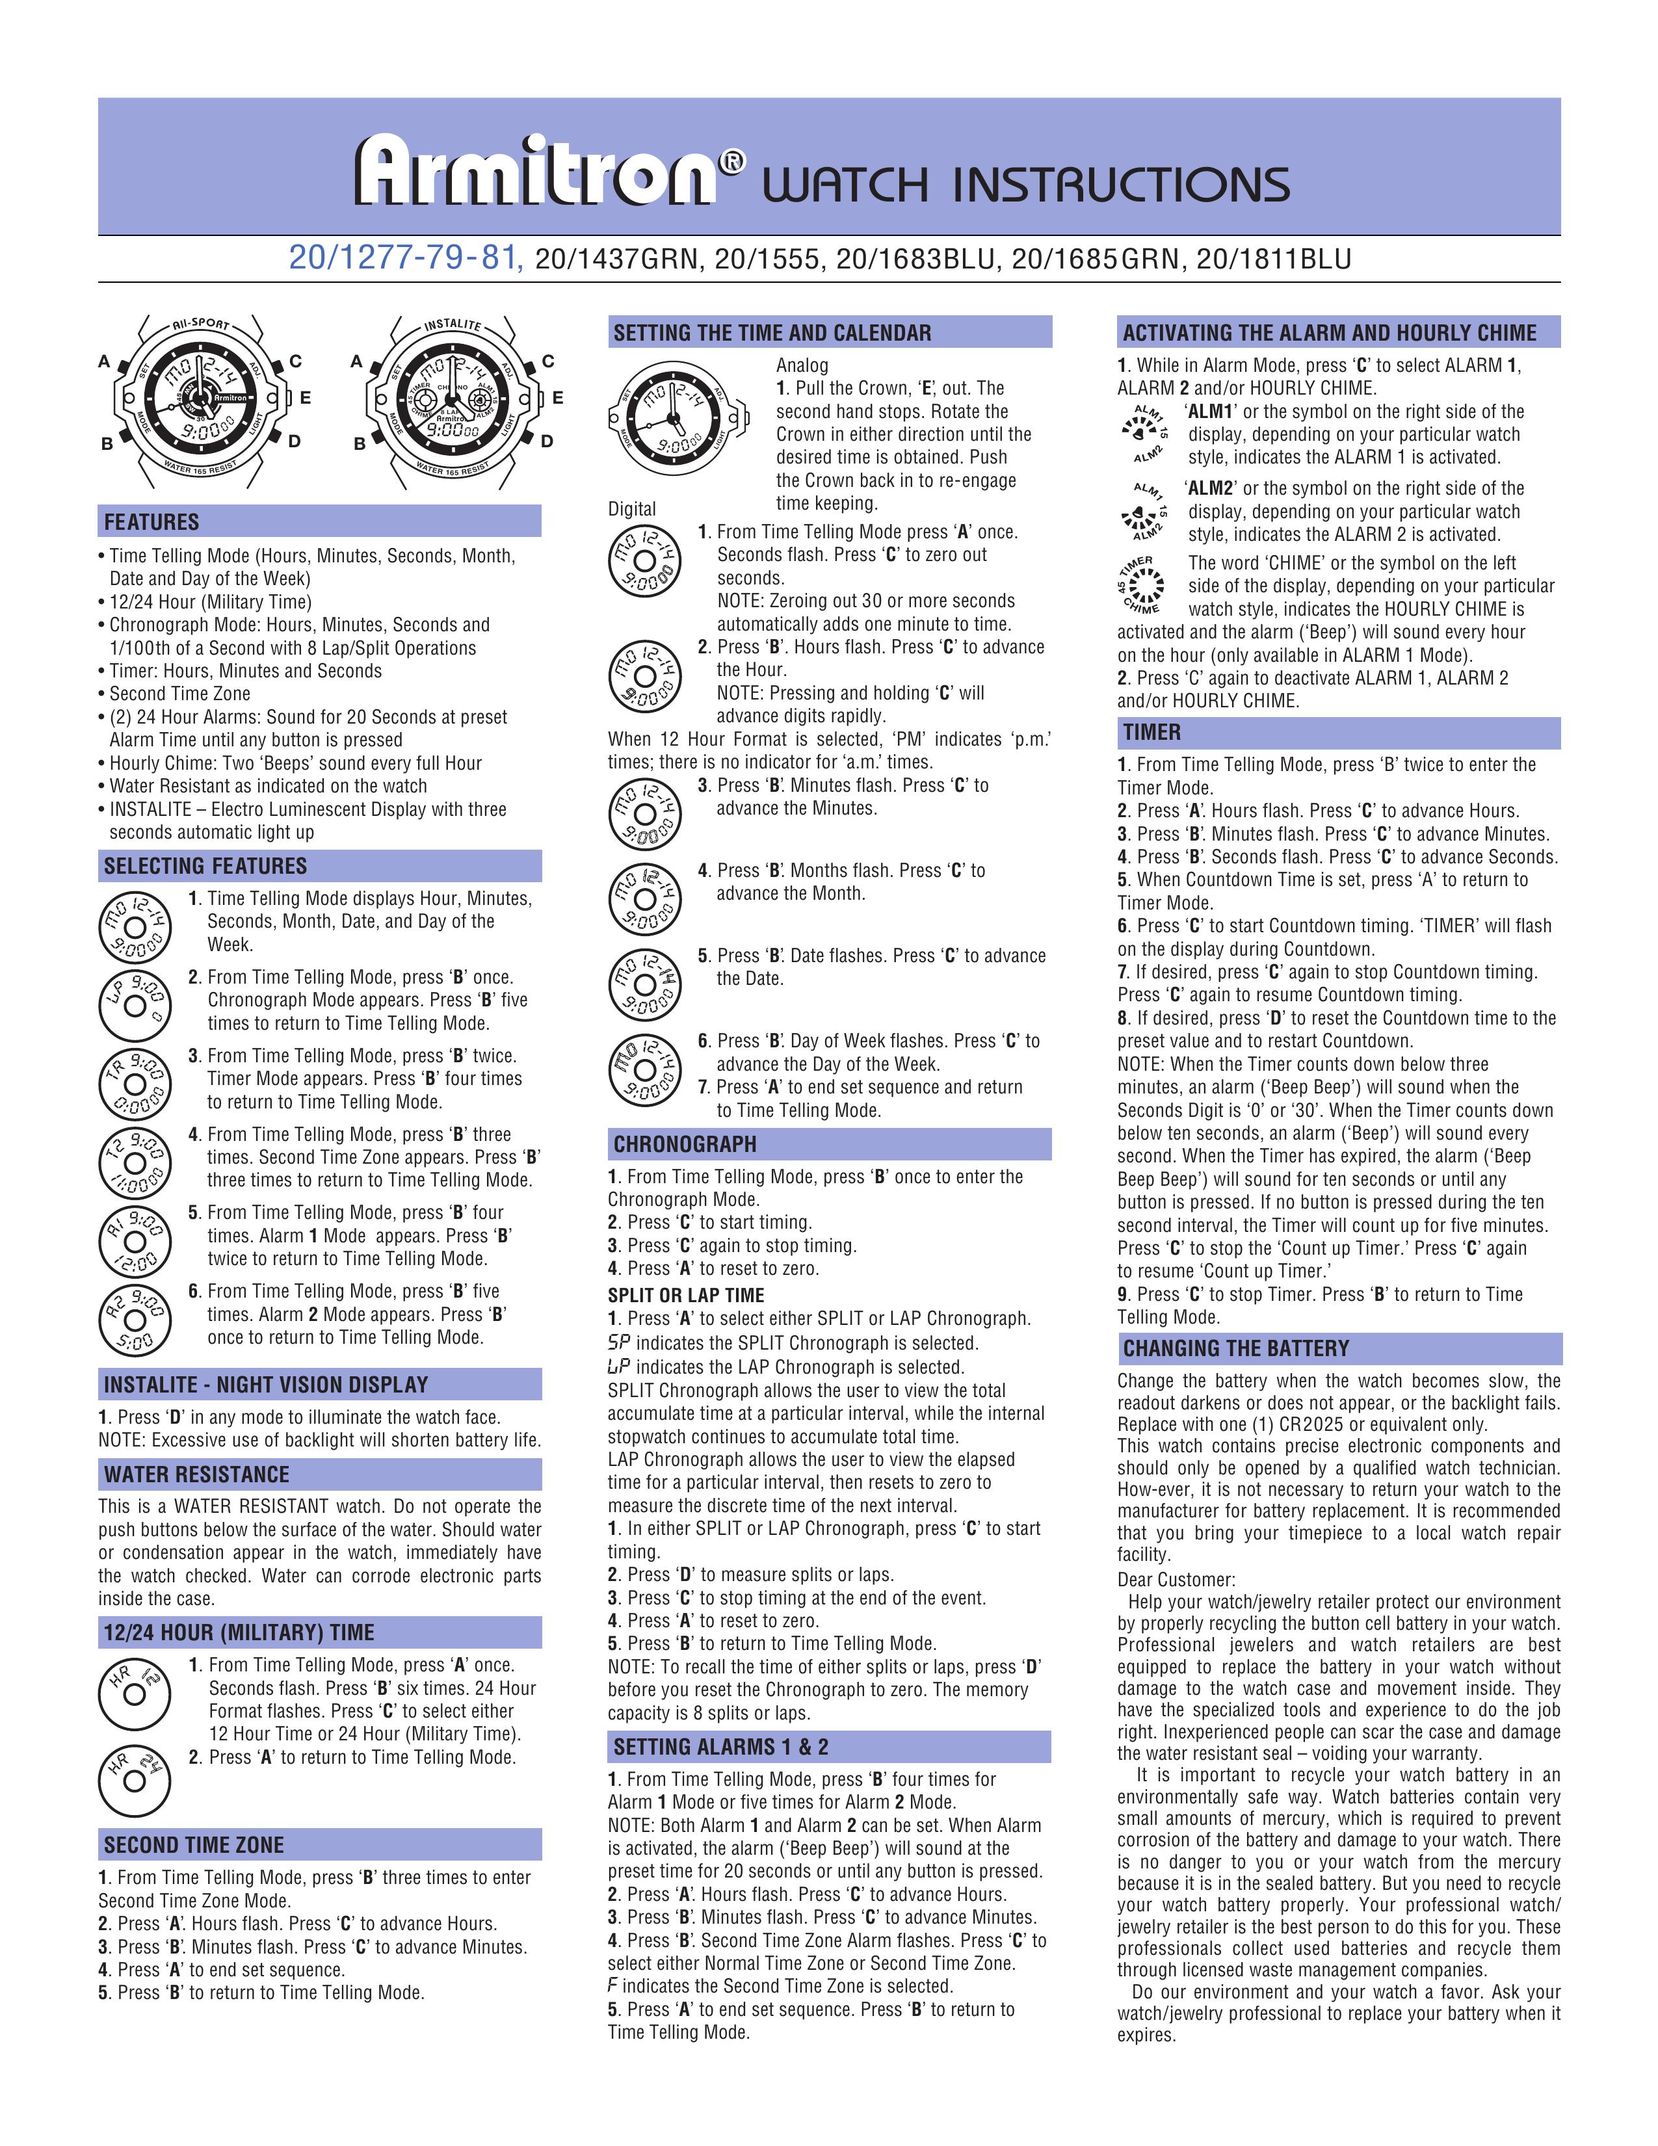 Armitron 20/1555 Watch User Manual